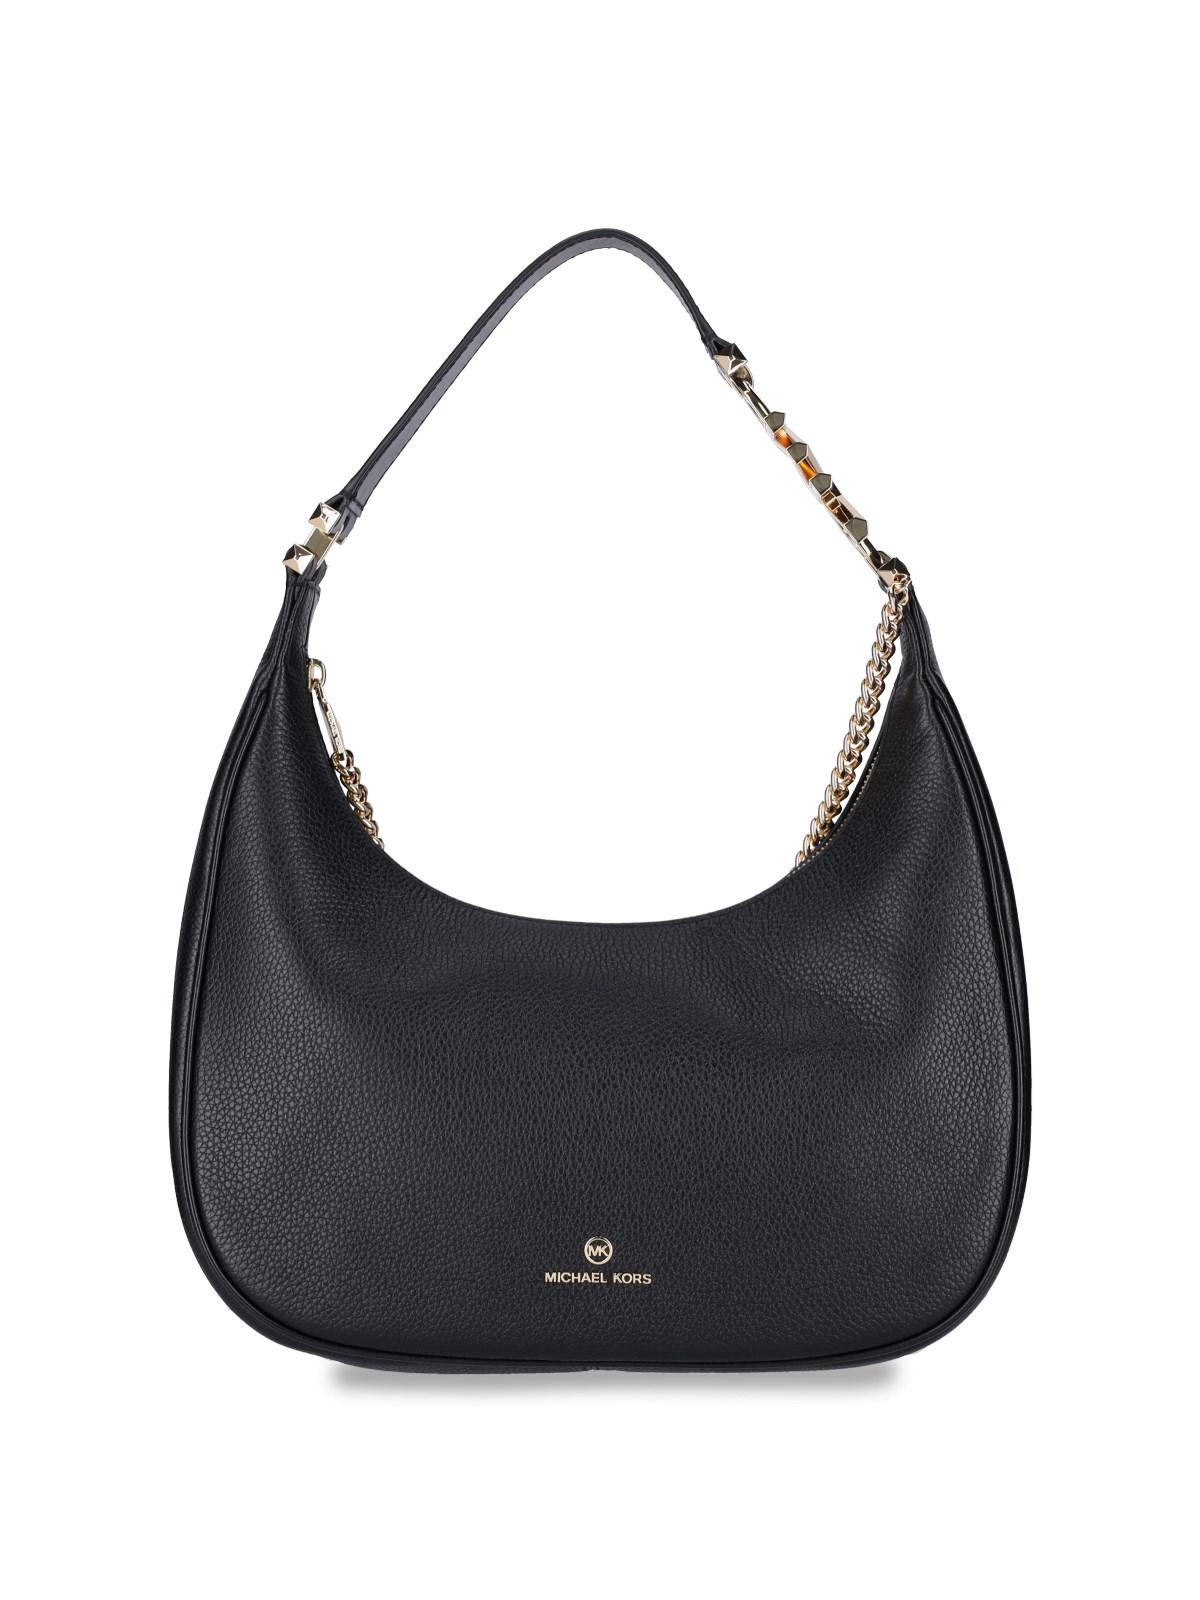 Michael Kors Piper Small Pouchette Black/Silver One Size: Handbags